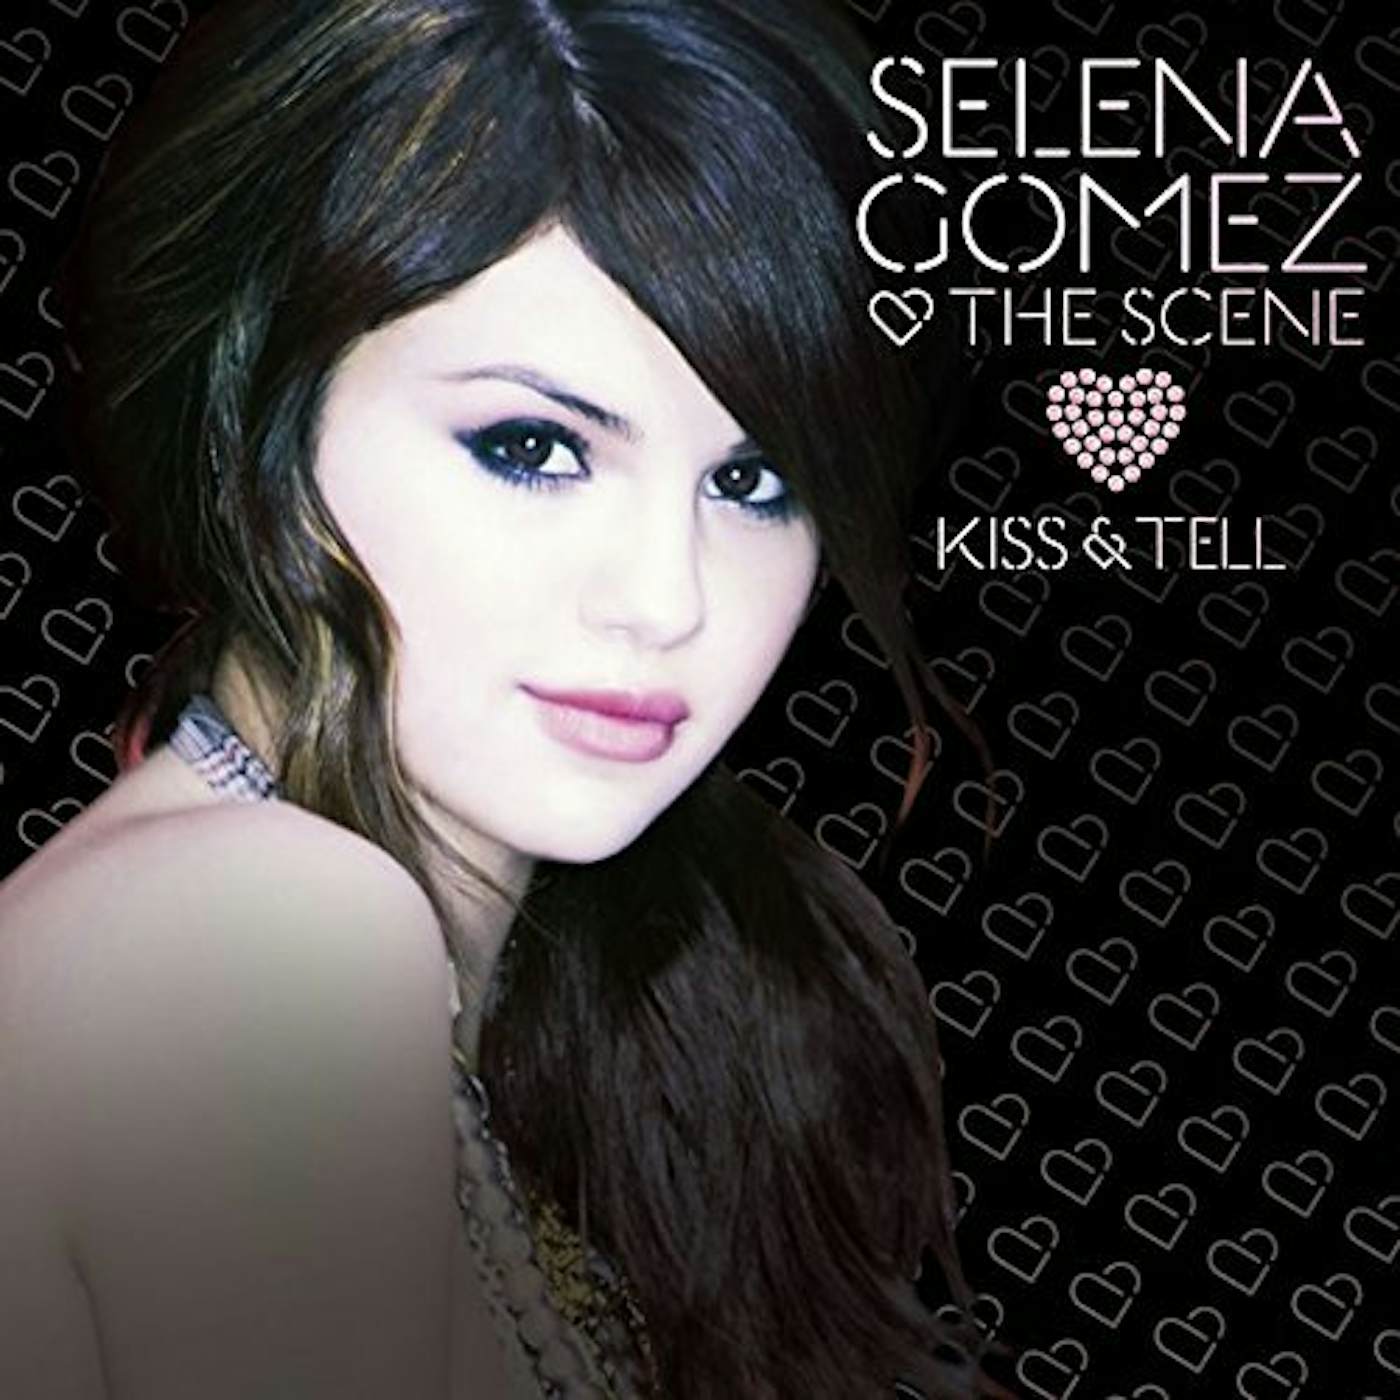 Selena Gomez KISS & TELL CD